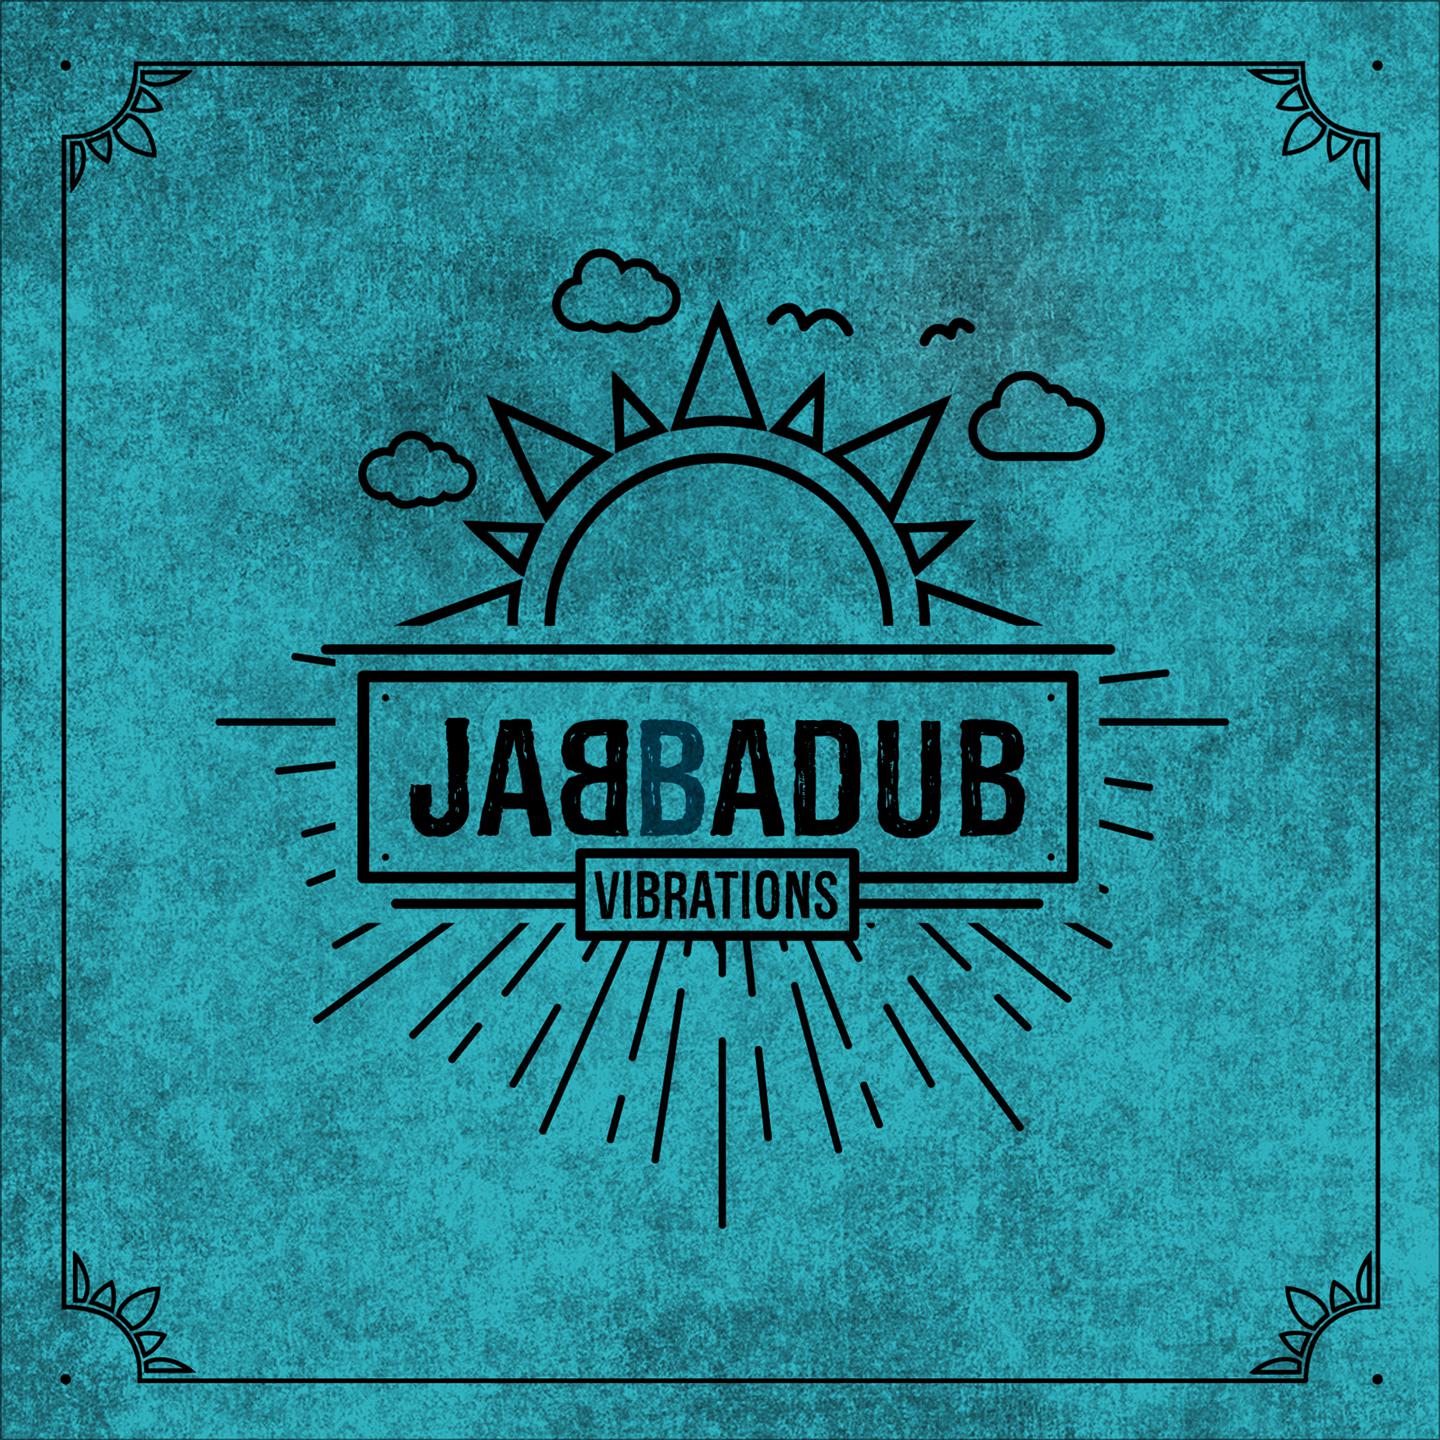 Jabbadub - Politician